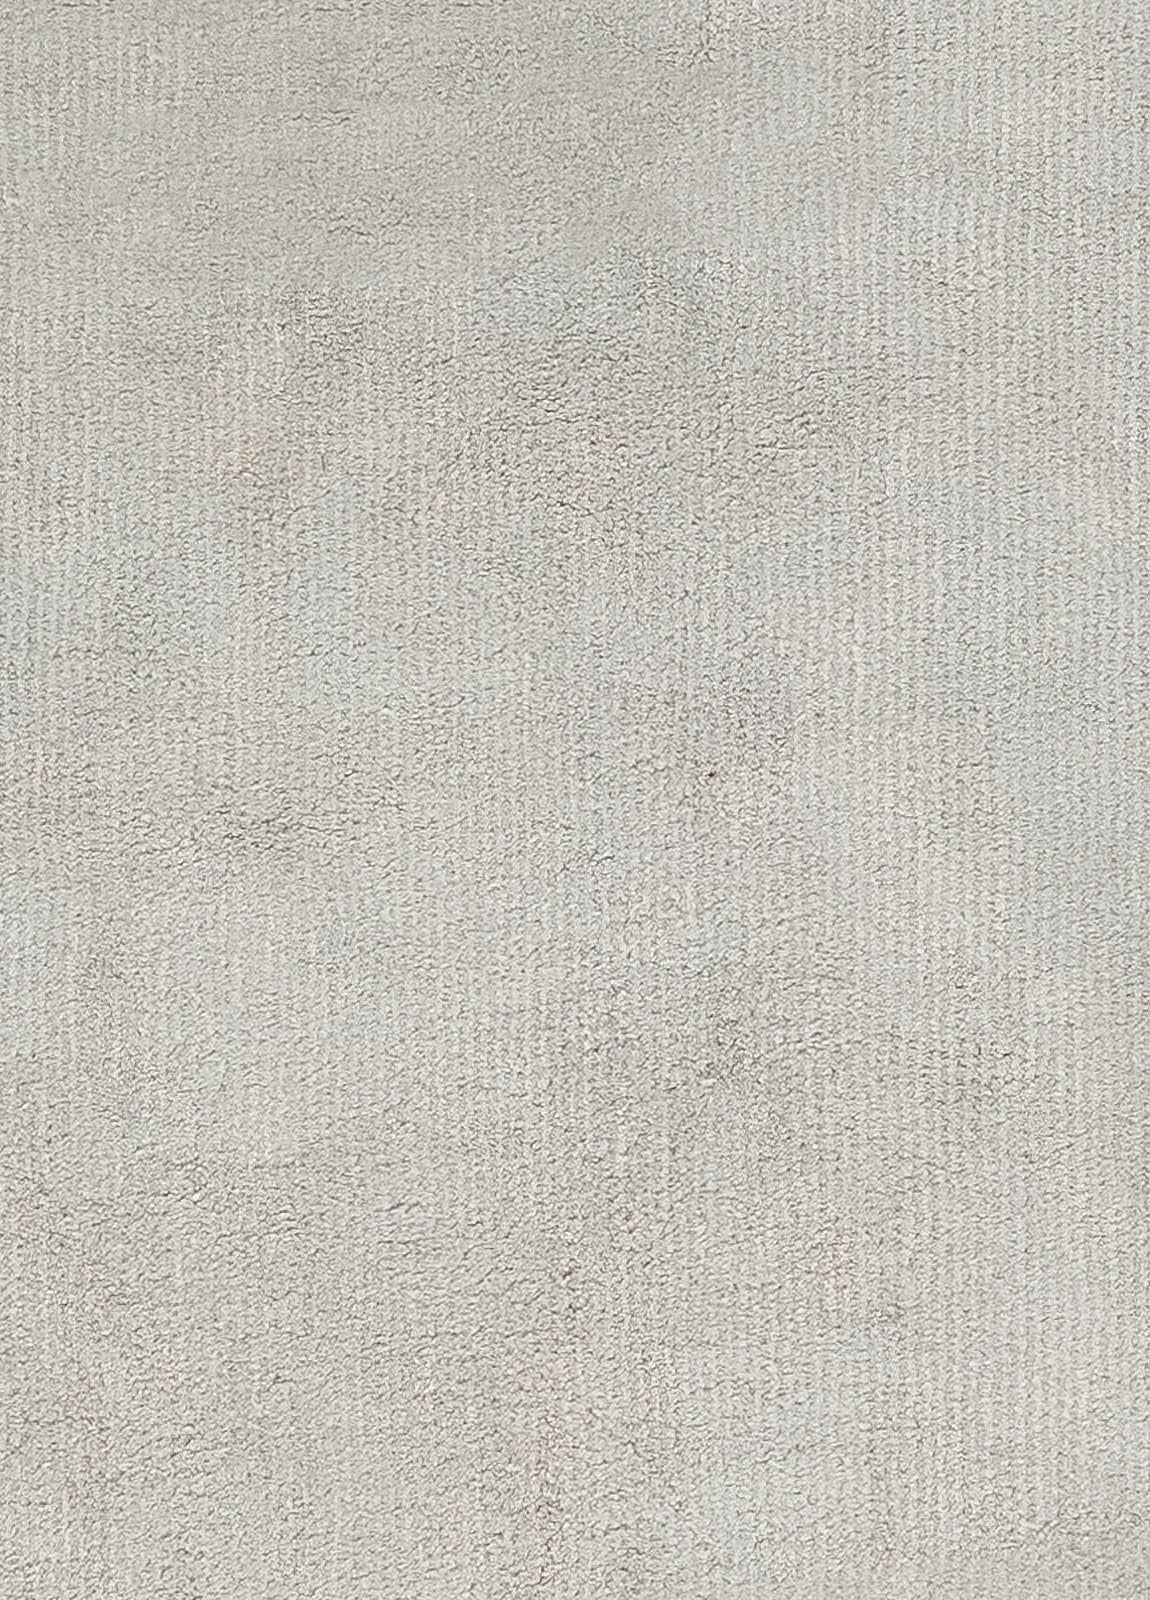 Contemporary striped beige handmade wool and silk rug by Doris Leslie Blau
Size: 8'9